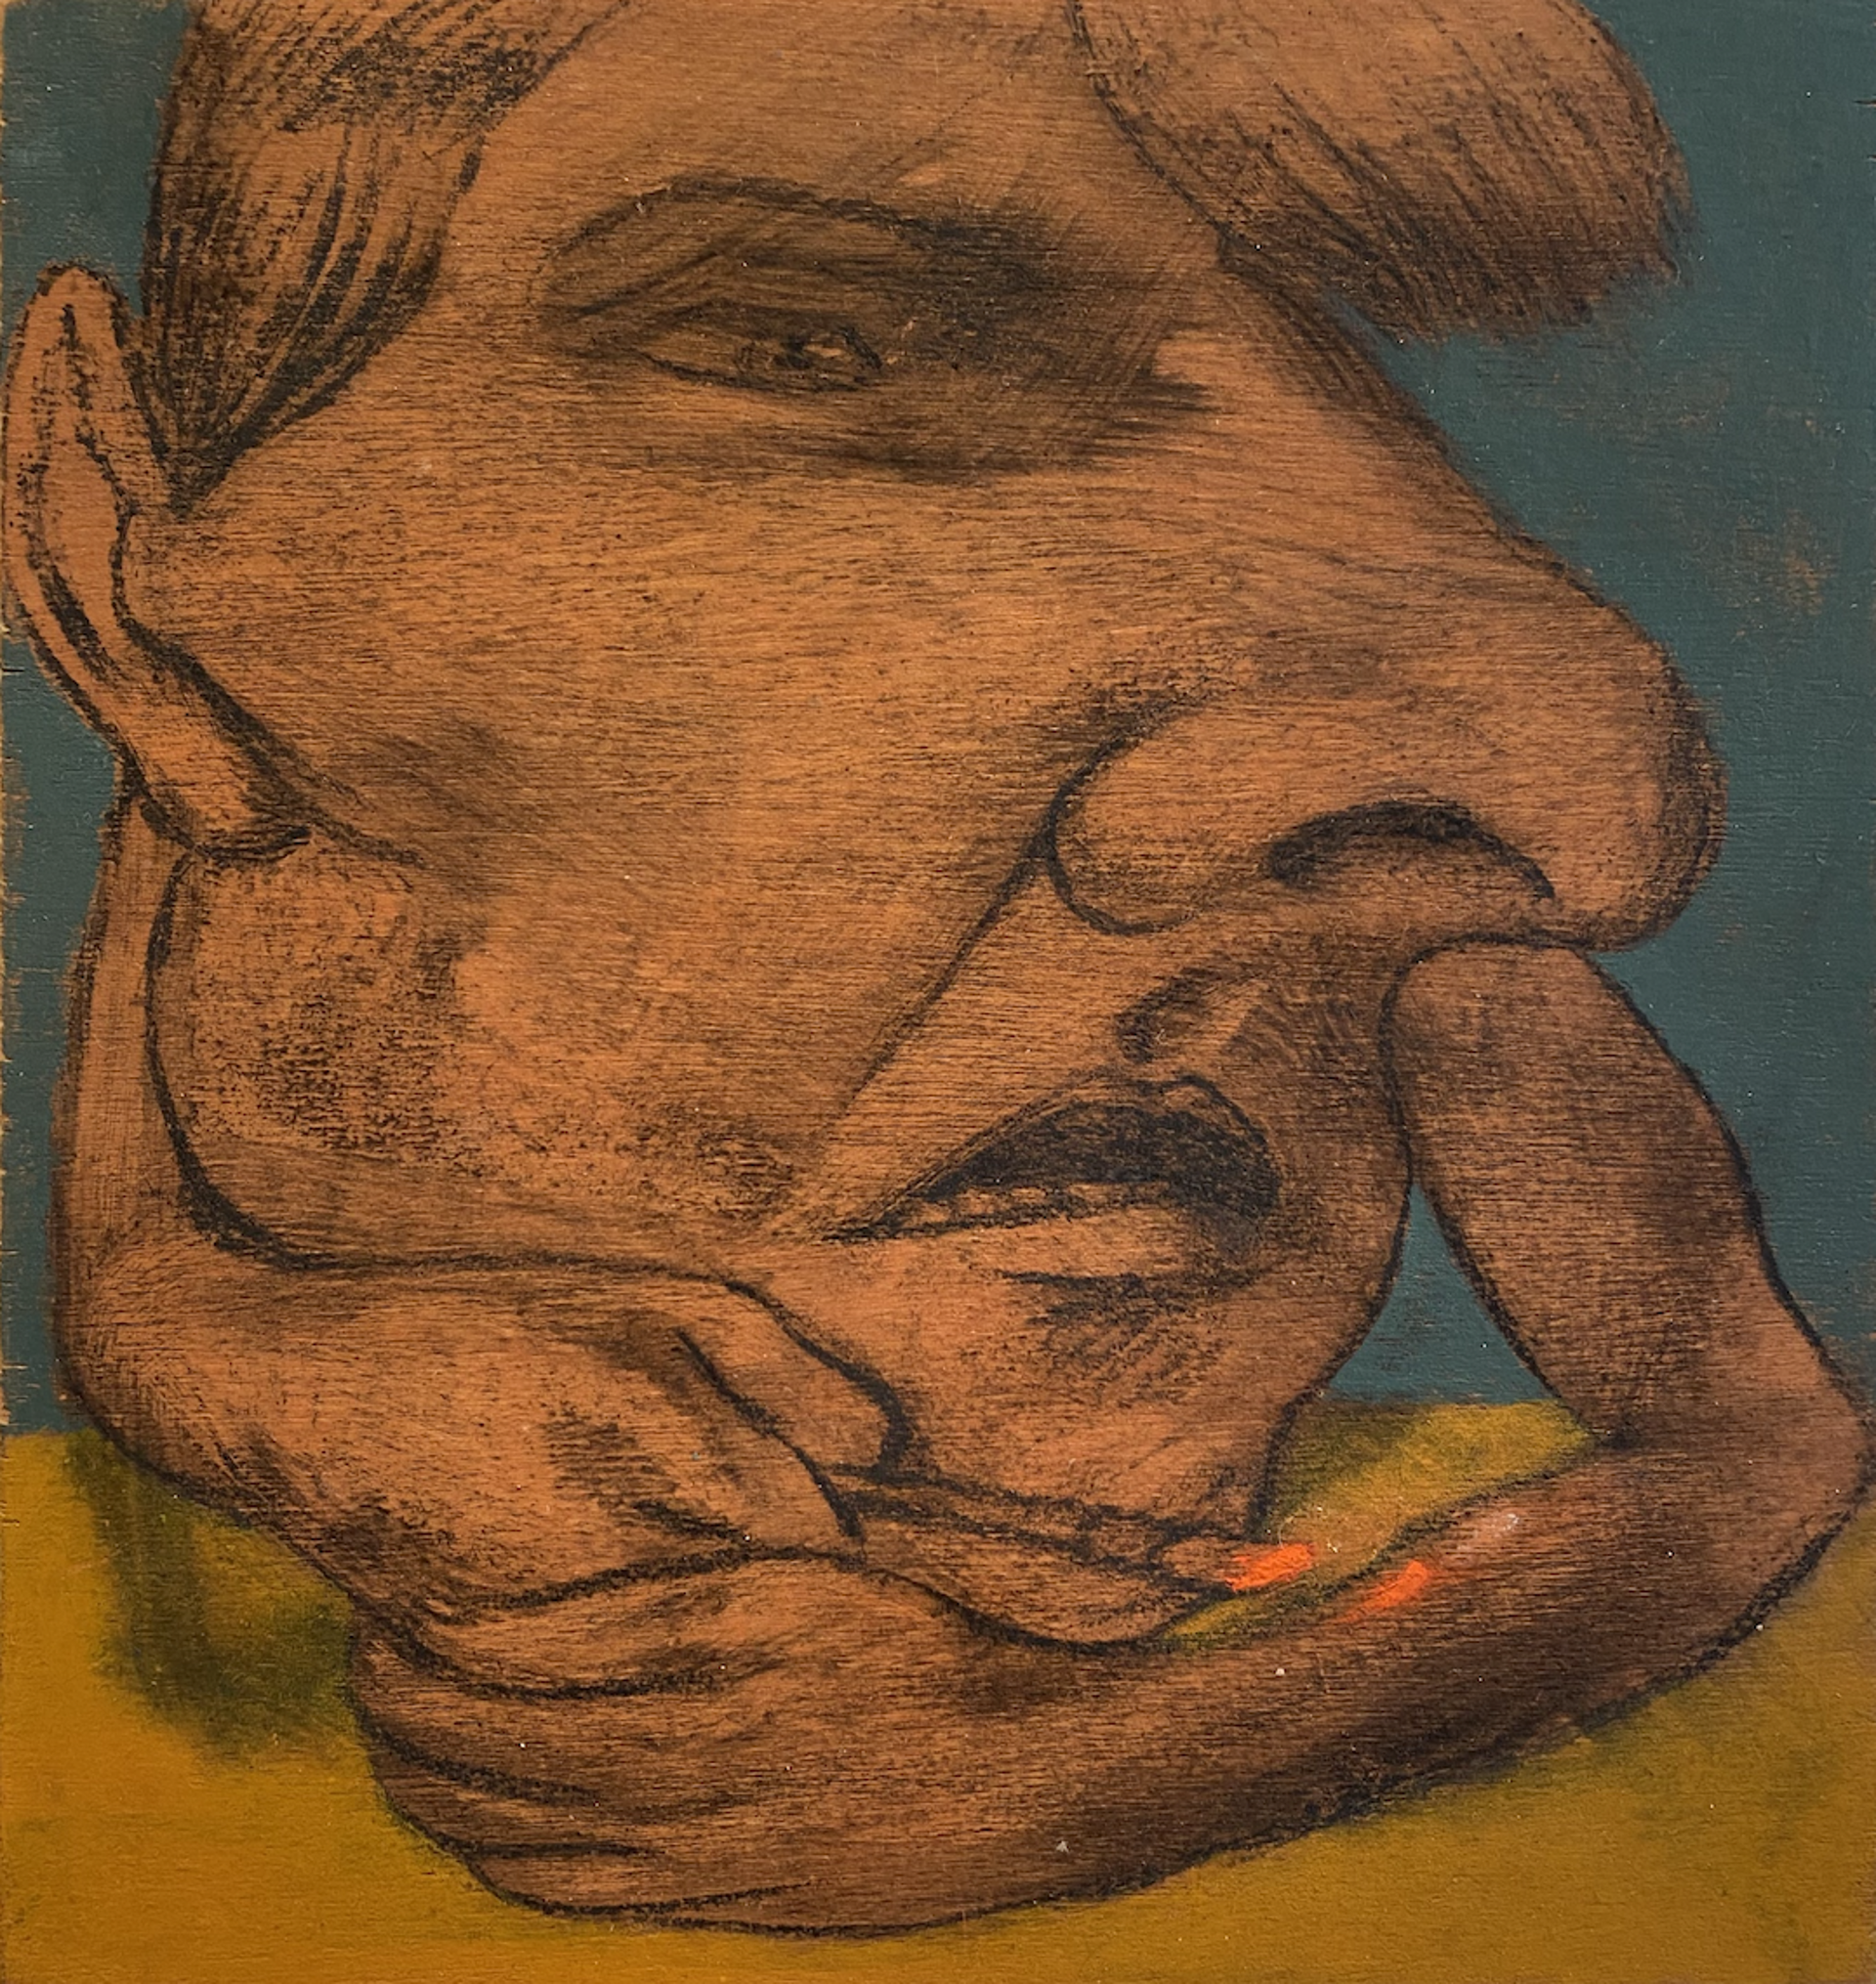 Imaginary Portrait #7: Francis Bacon, 2013 by Jeff Donovan